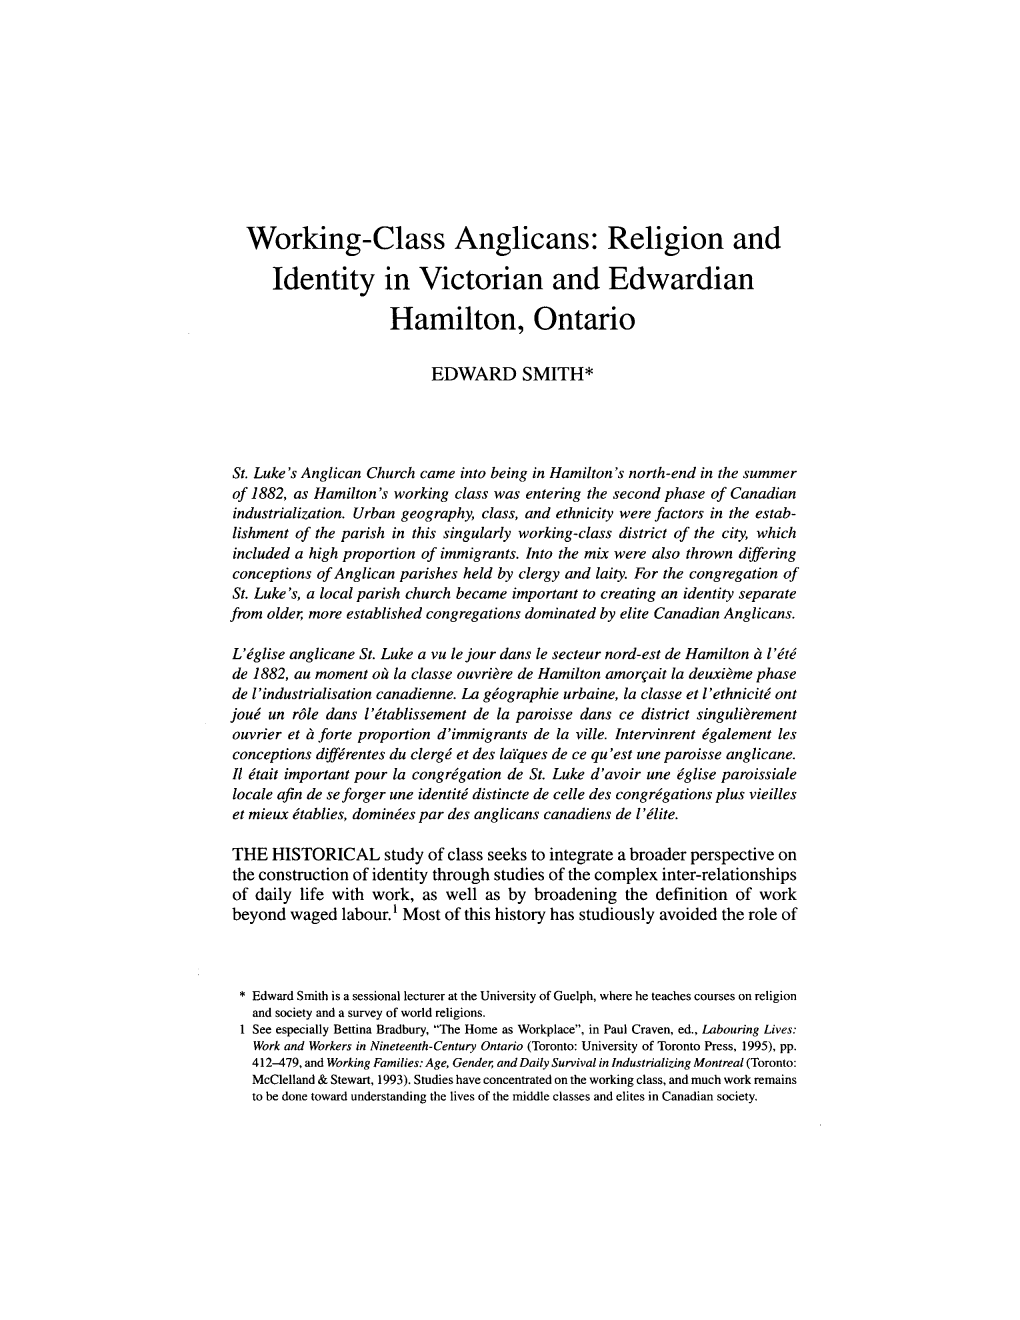 Religion and Identity in Victorian and Edwardian Hamilton, Ontario